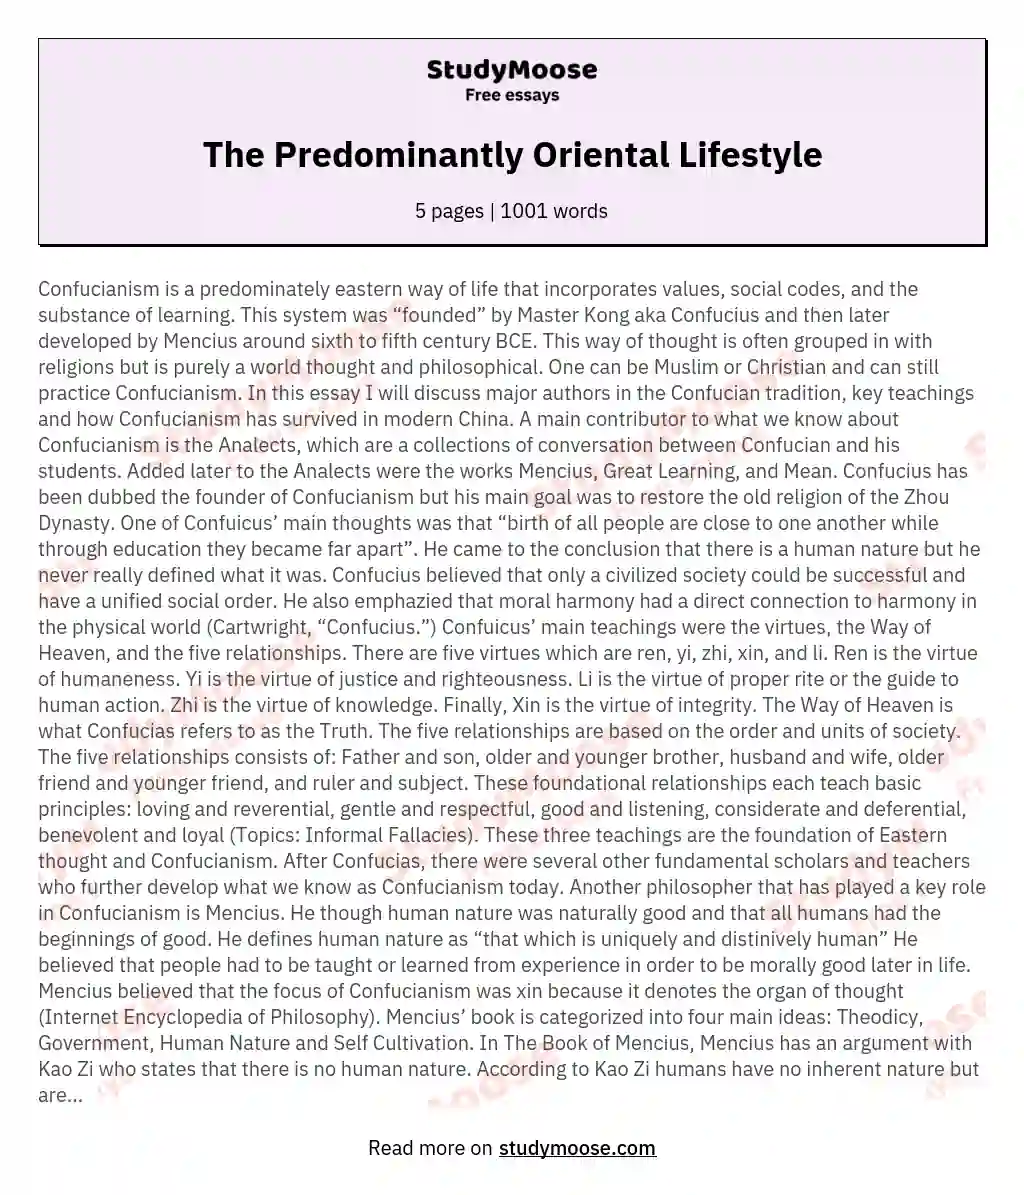 The Predominantly Oriental Lifestyle essay